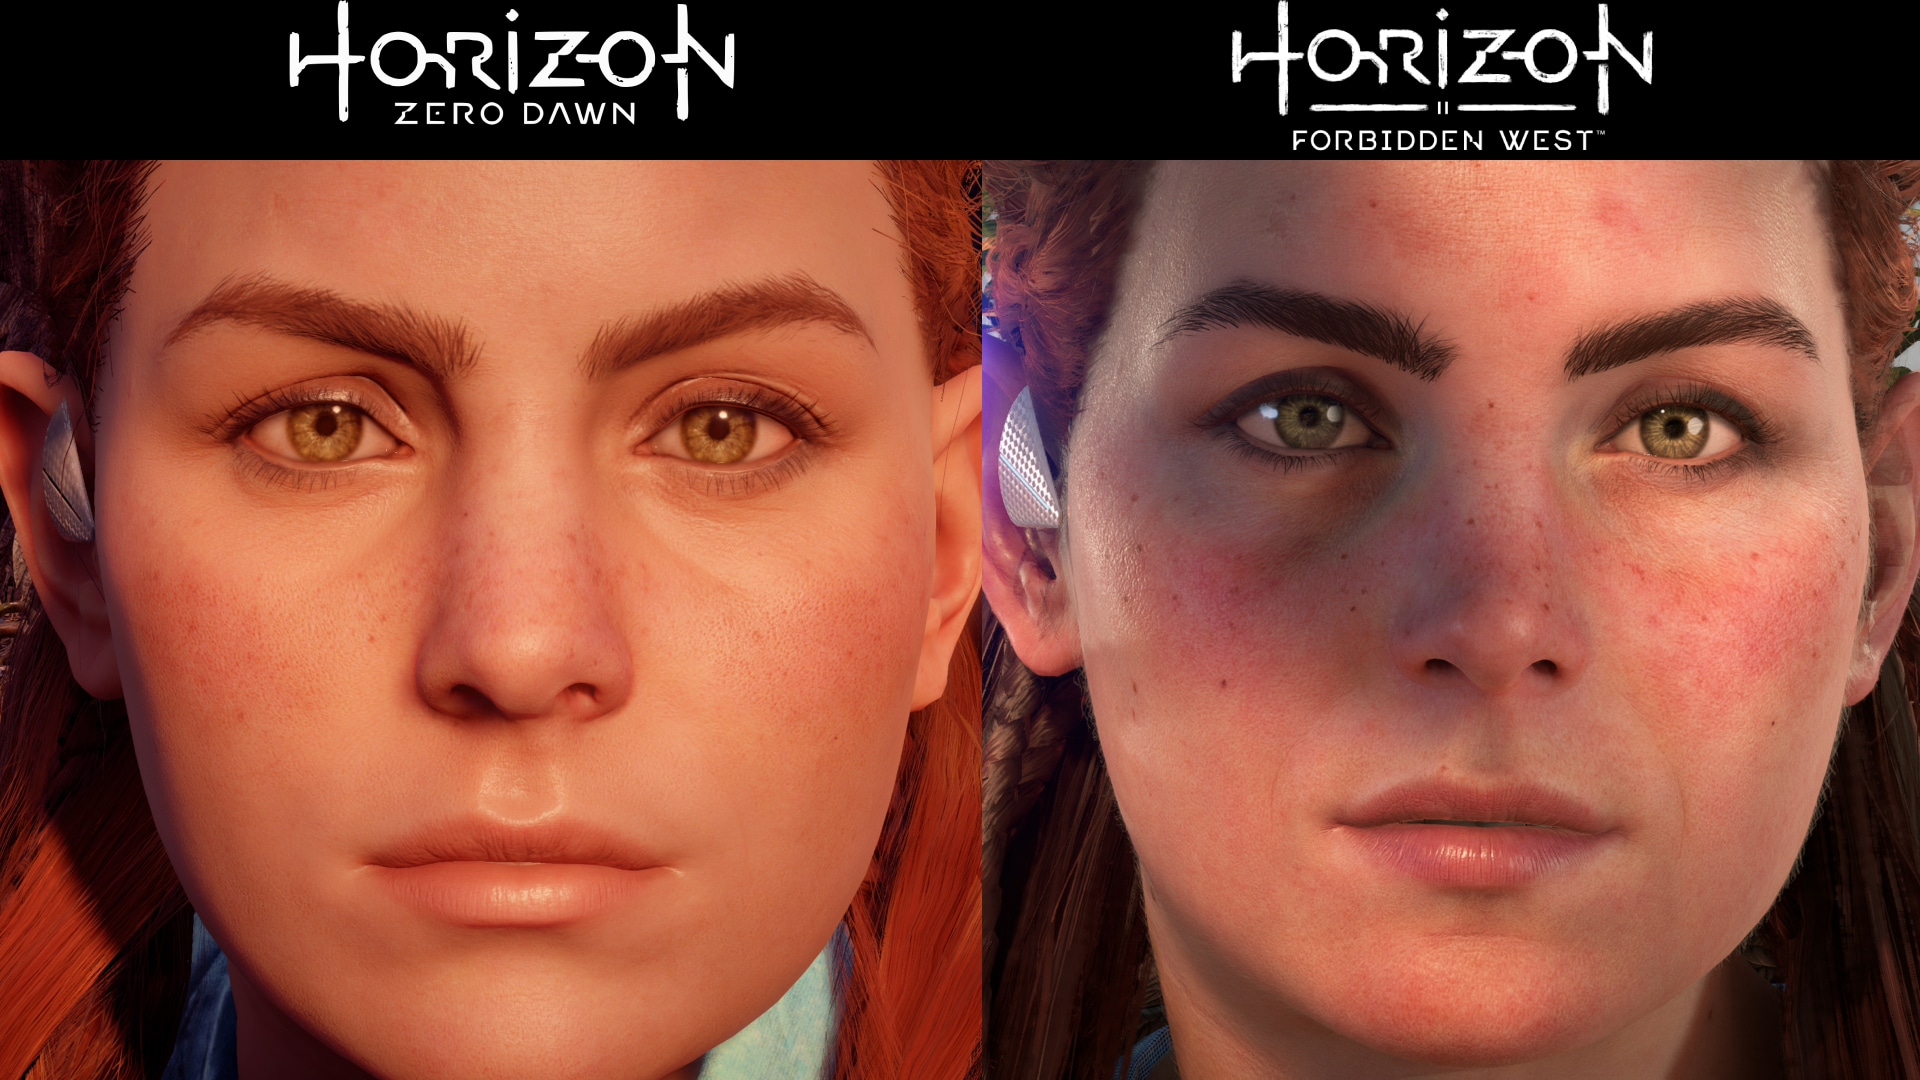 horizon-forbidden-west-vs-horizon-zero-dawn-comparison-2.jpg